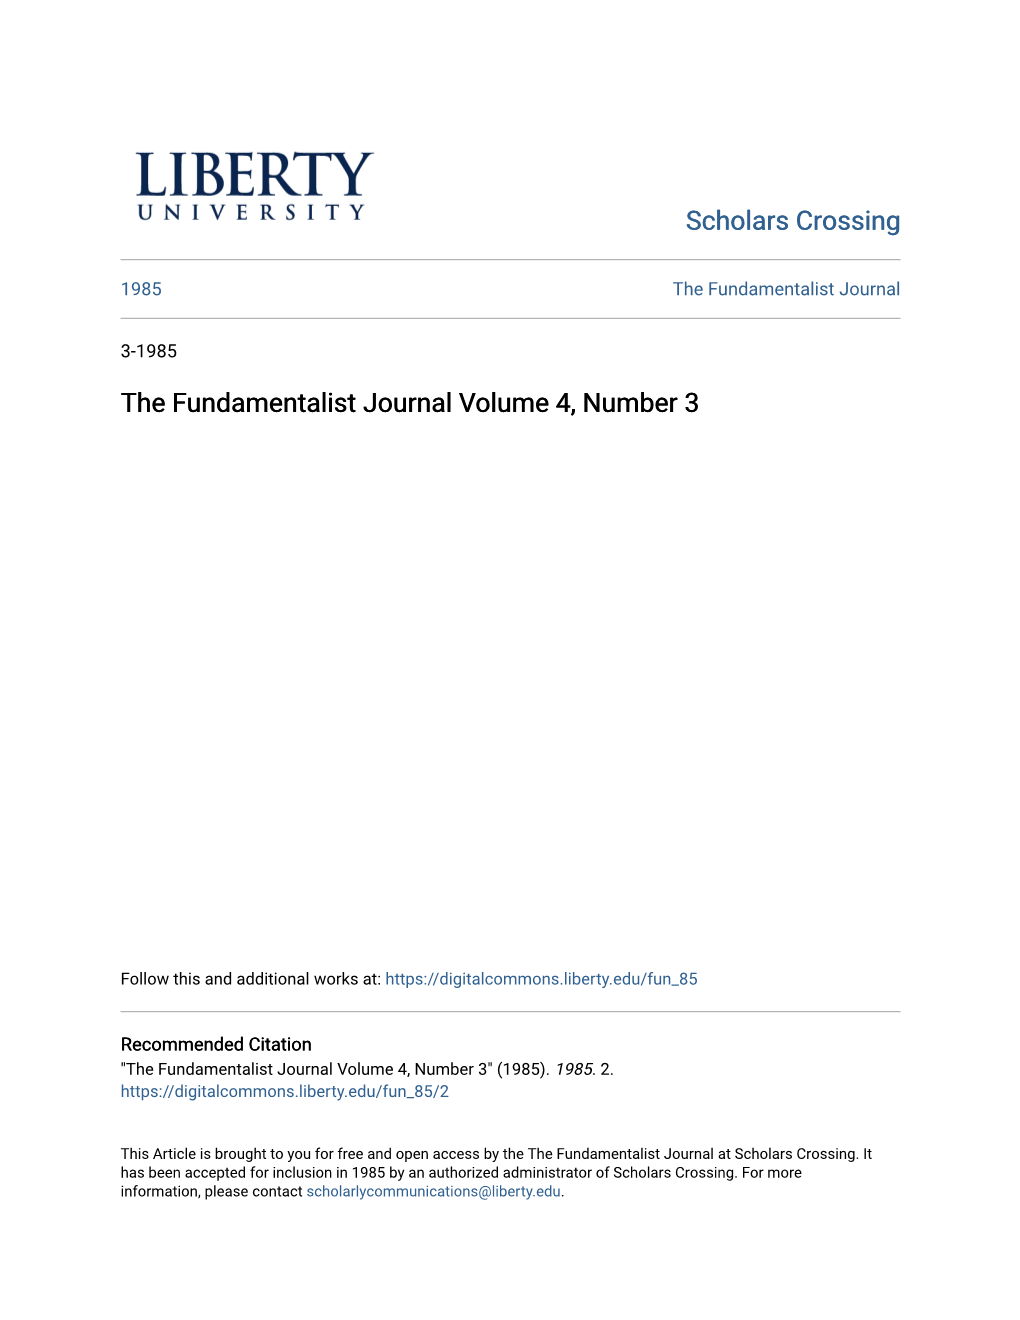 The Fundamentalist Journal Volume 4, Number 3